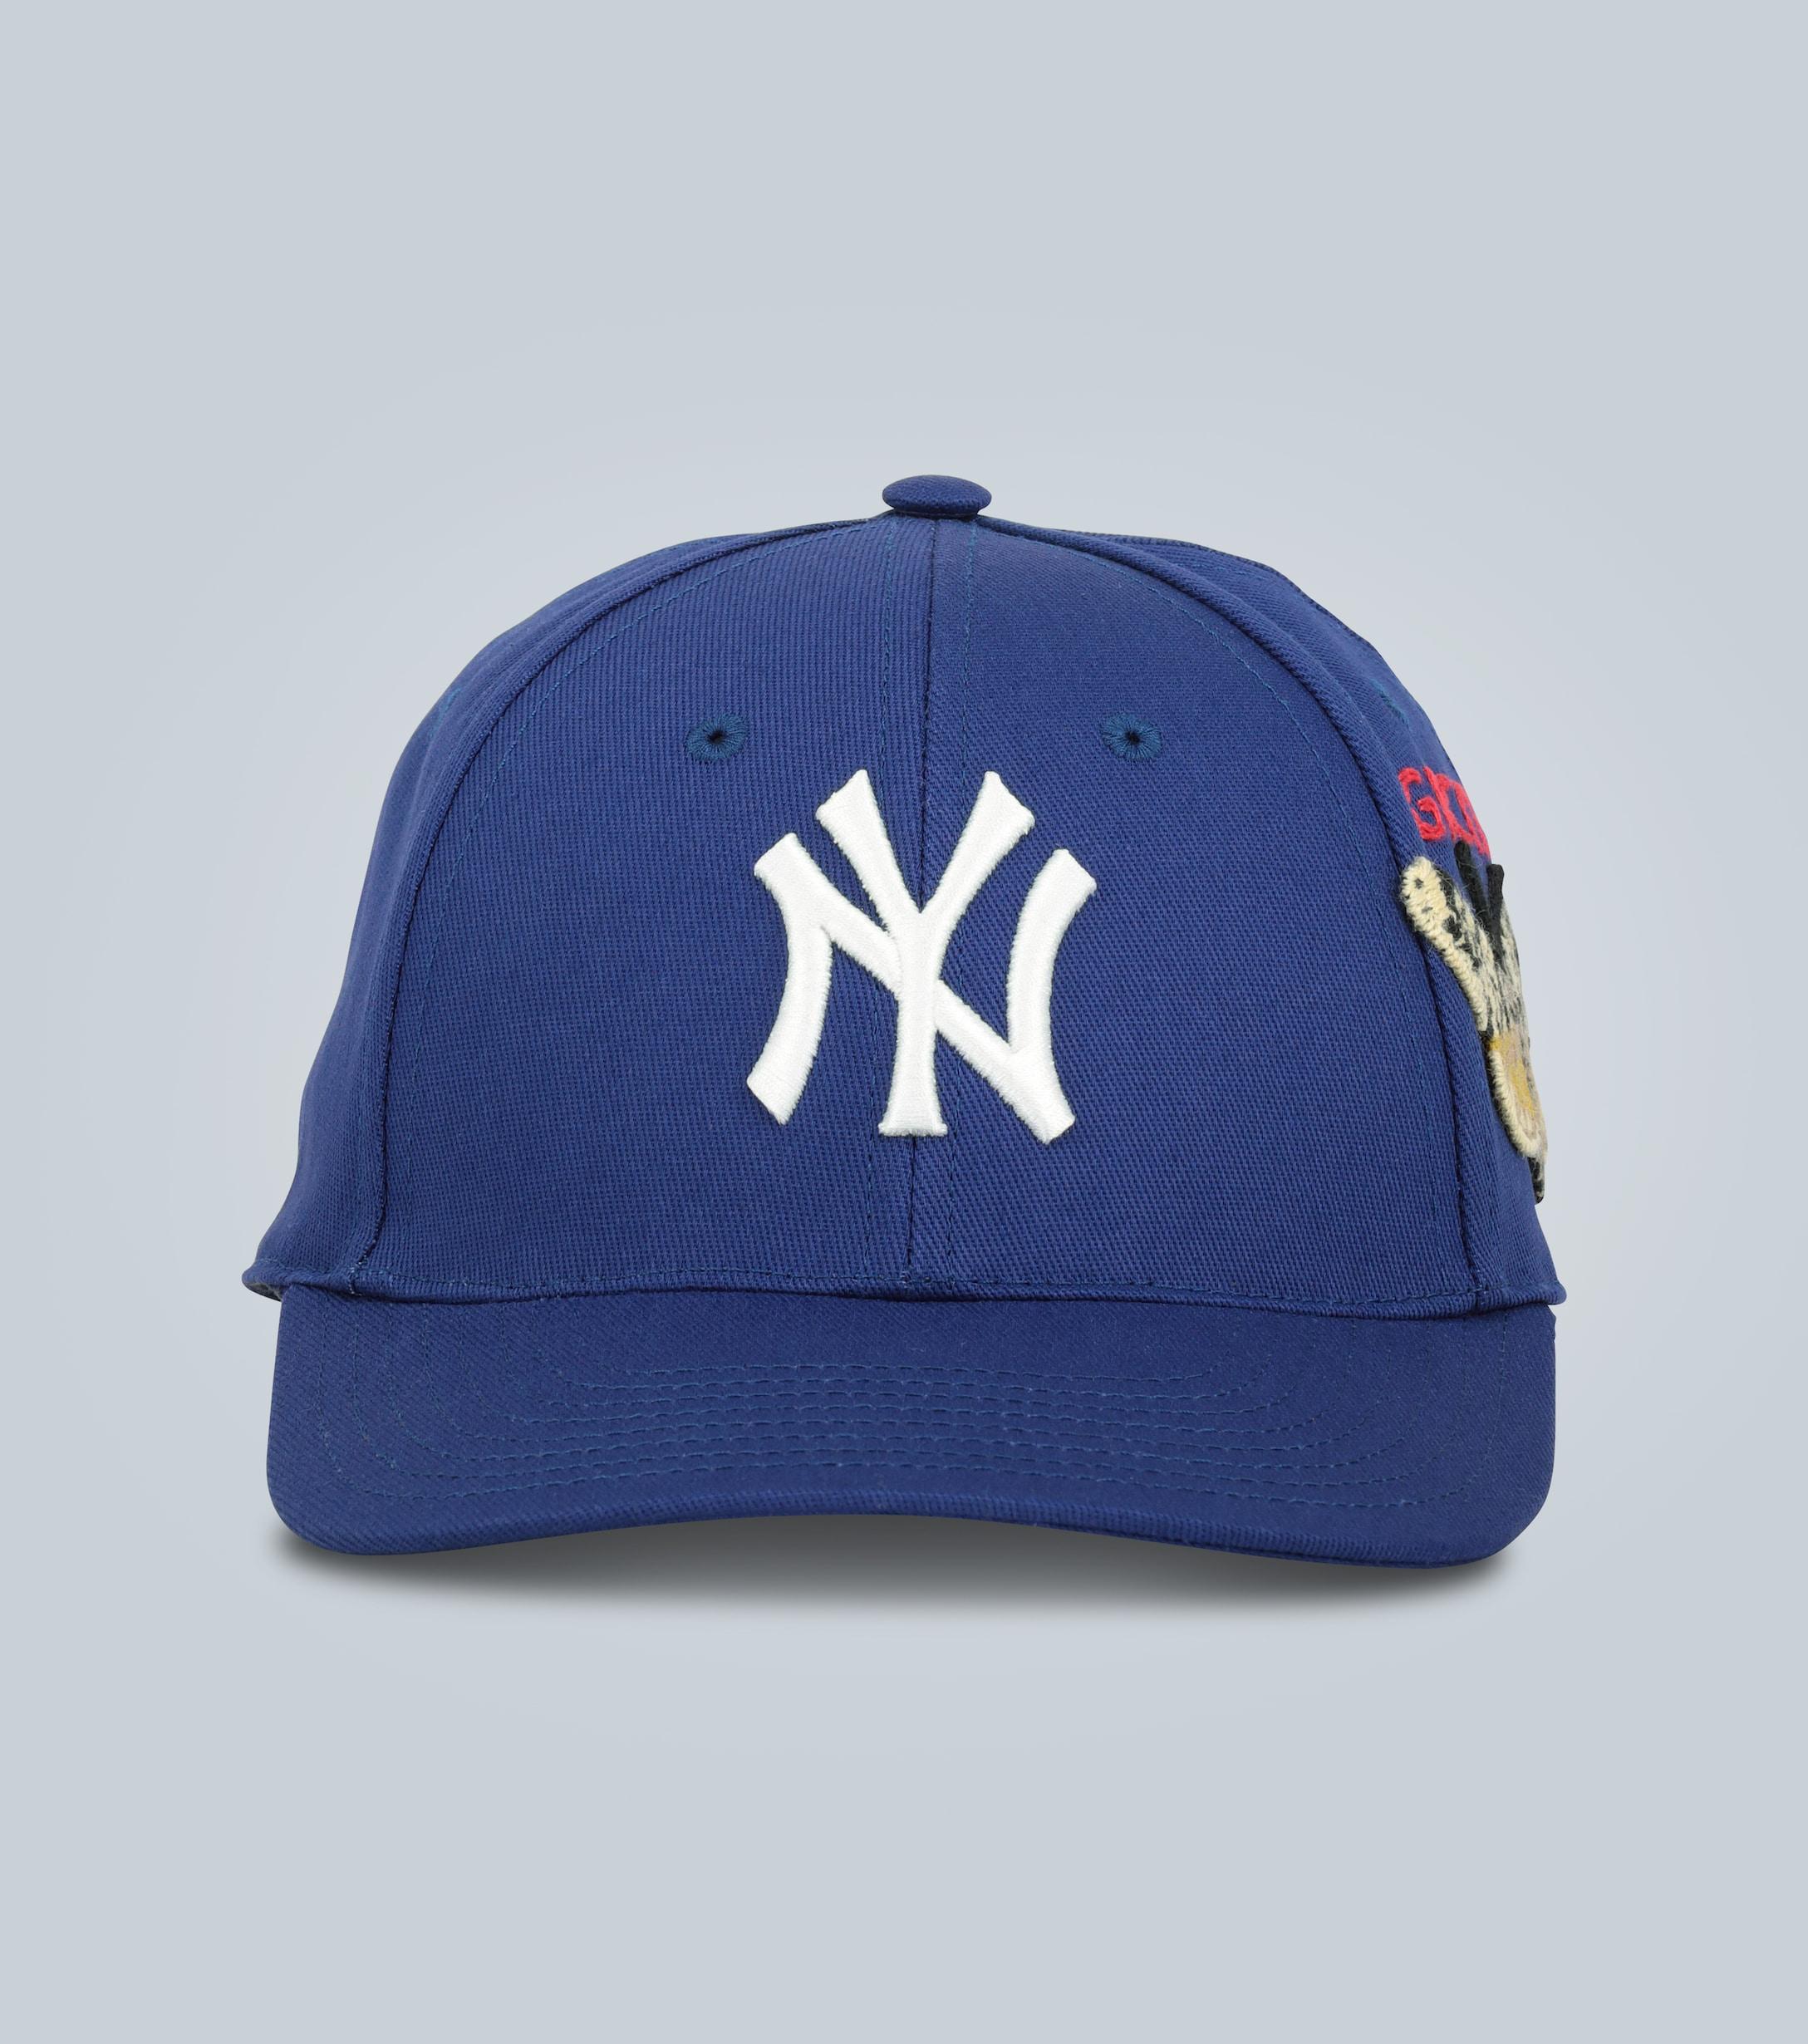 Gucci x NY Yankees Unisex Baseball Cap